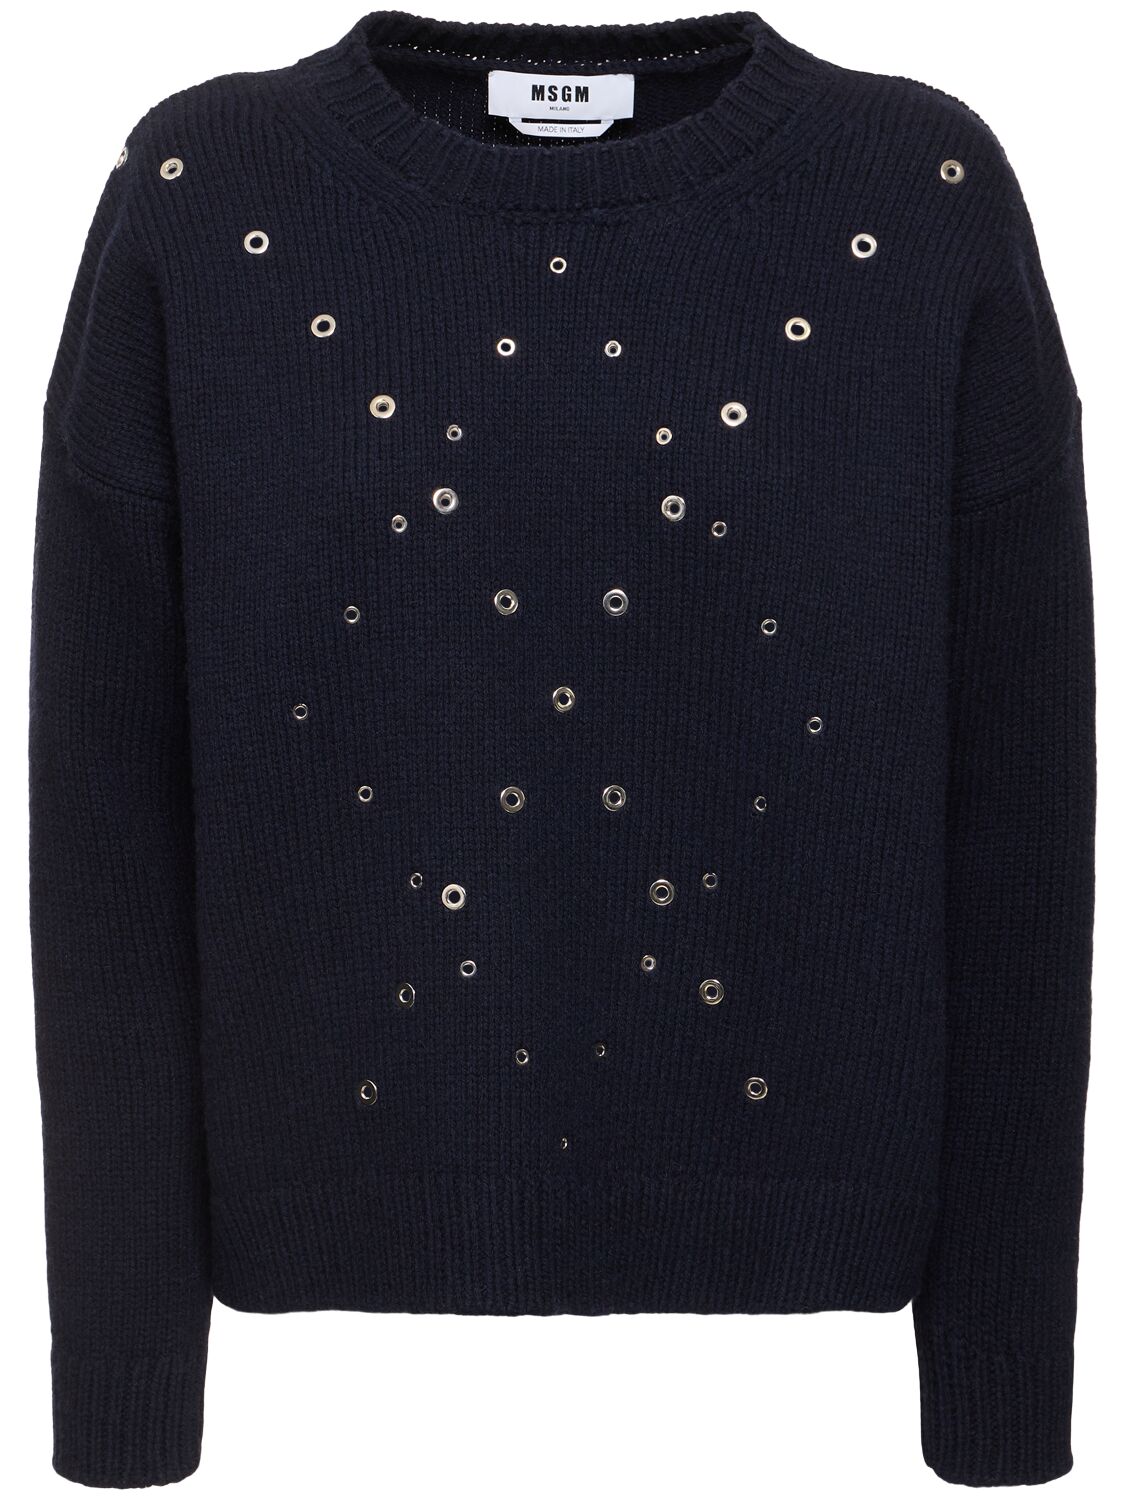 Msgm Wool Blend Embellished Crewneck Sweater In Black